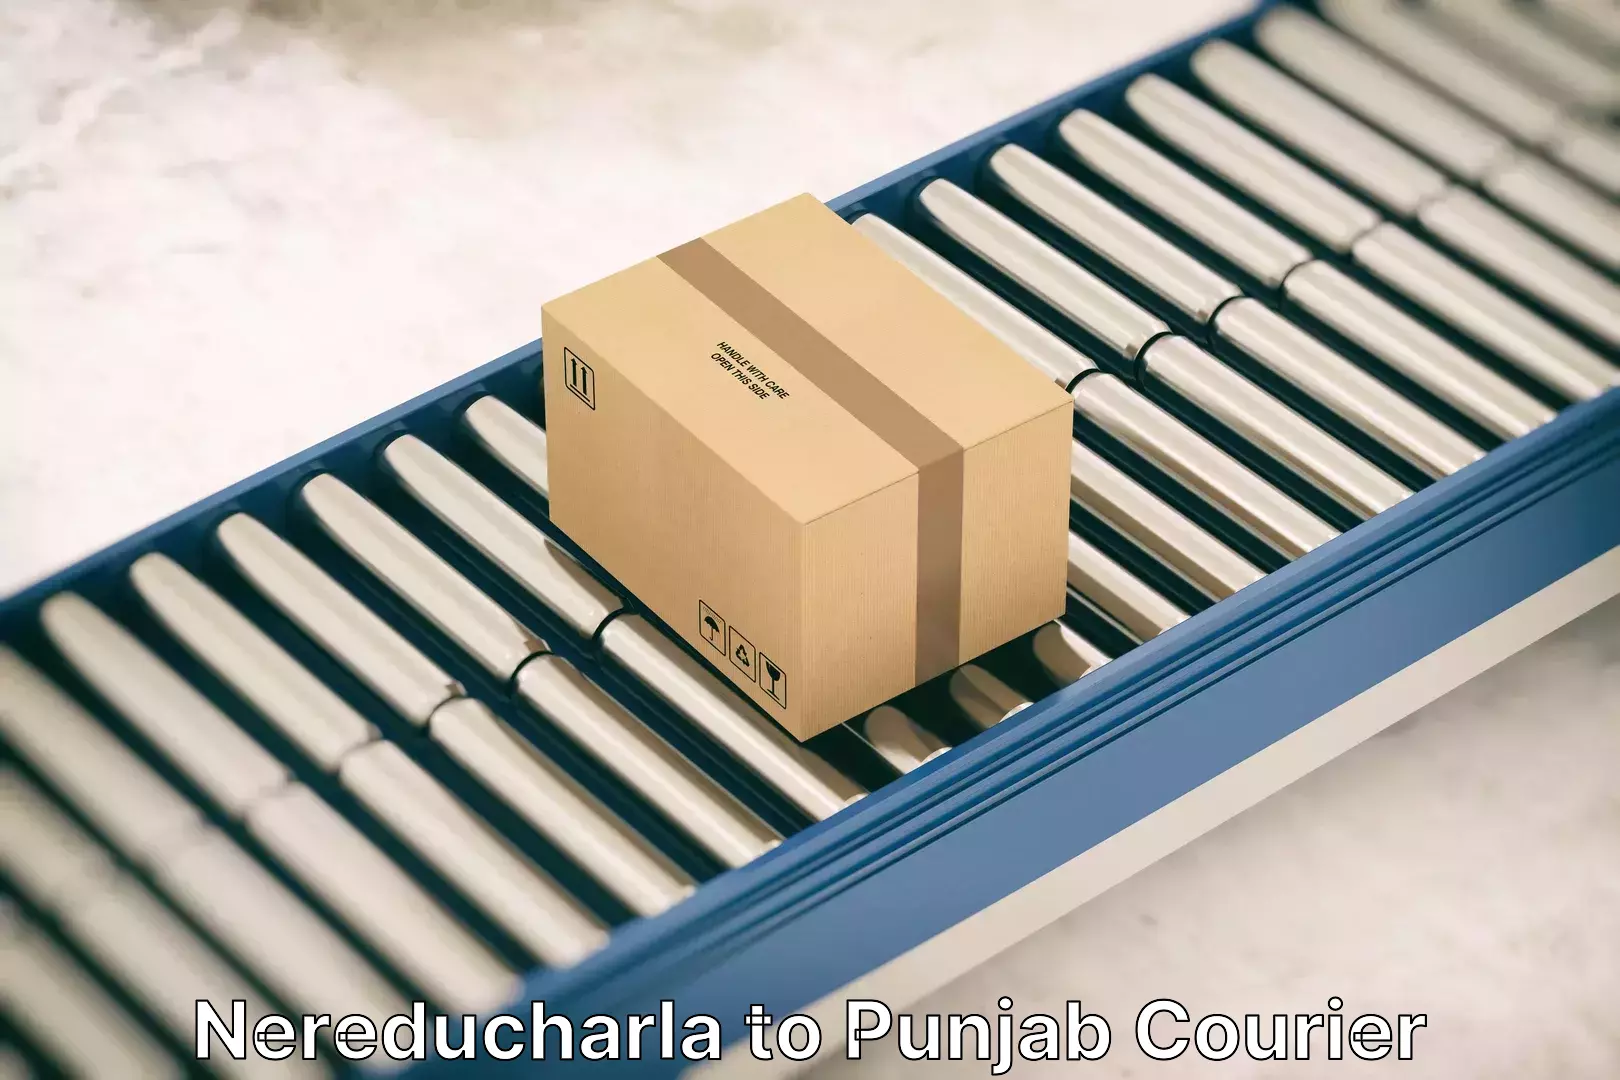 Furniture transport experts Nereducharla to Punjab